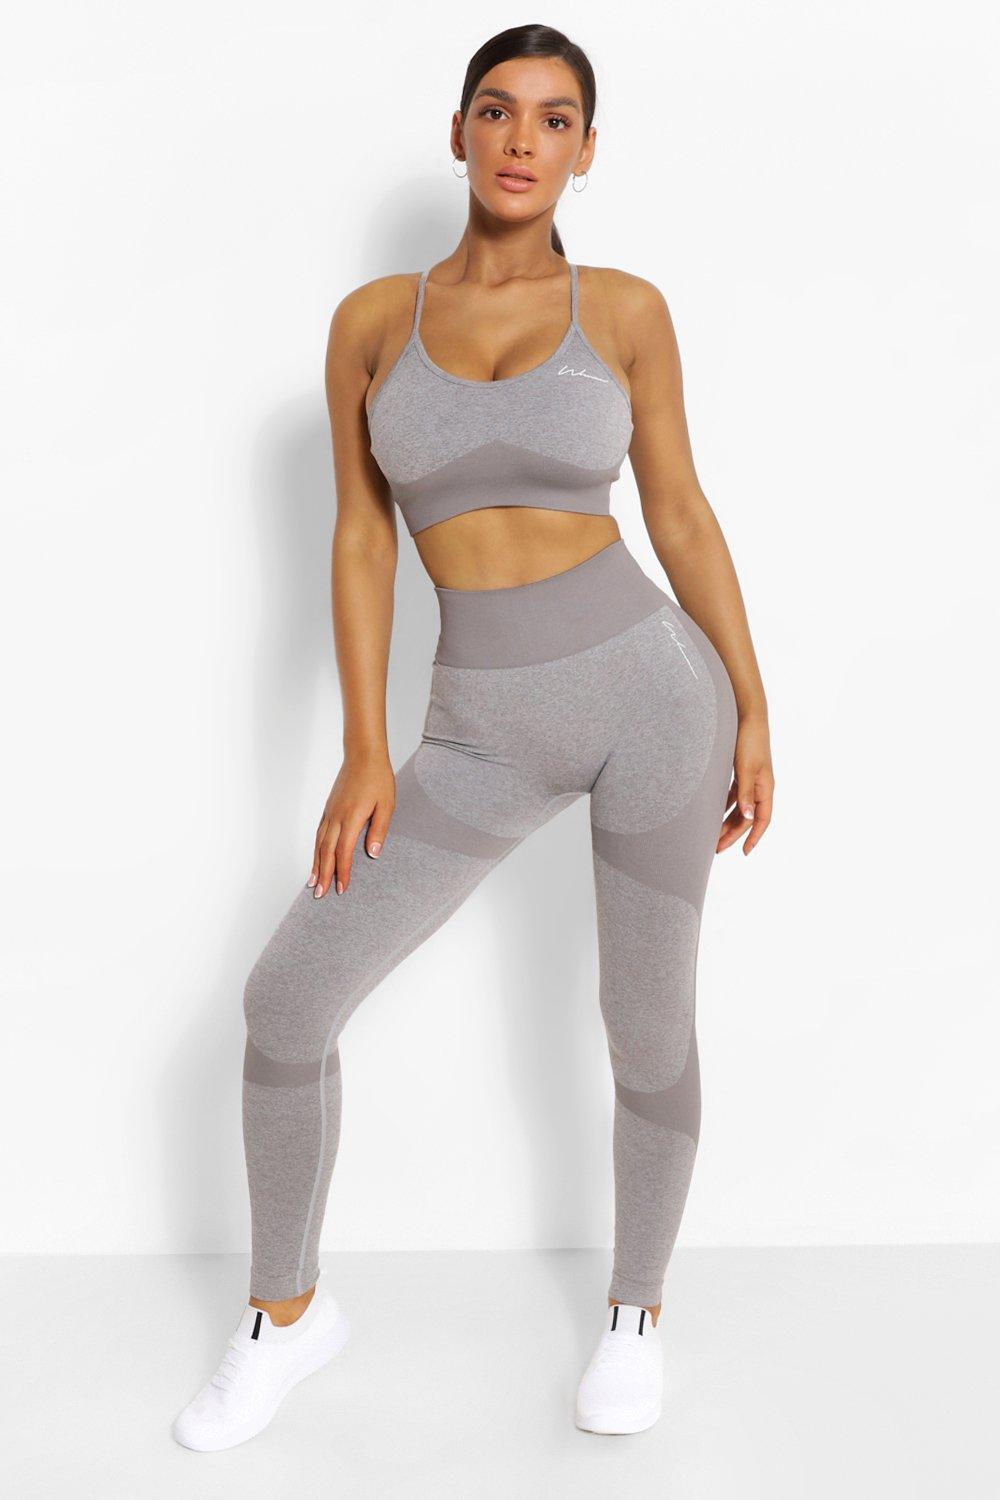 https://media.boohoo.com/i/boohoo/fzz56948_grey_xl_3/female-grey-fit-seamless-contrast-workout-leggings